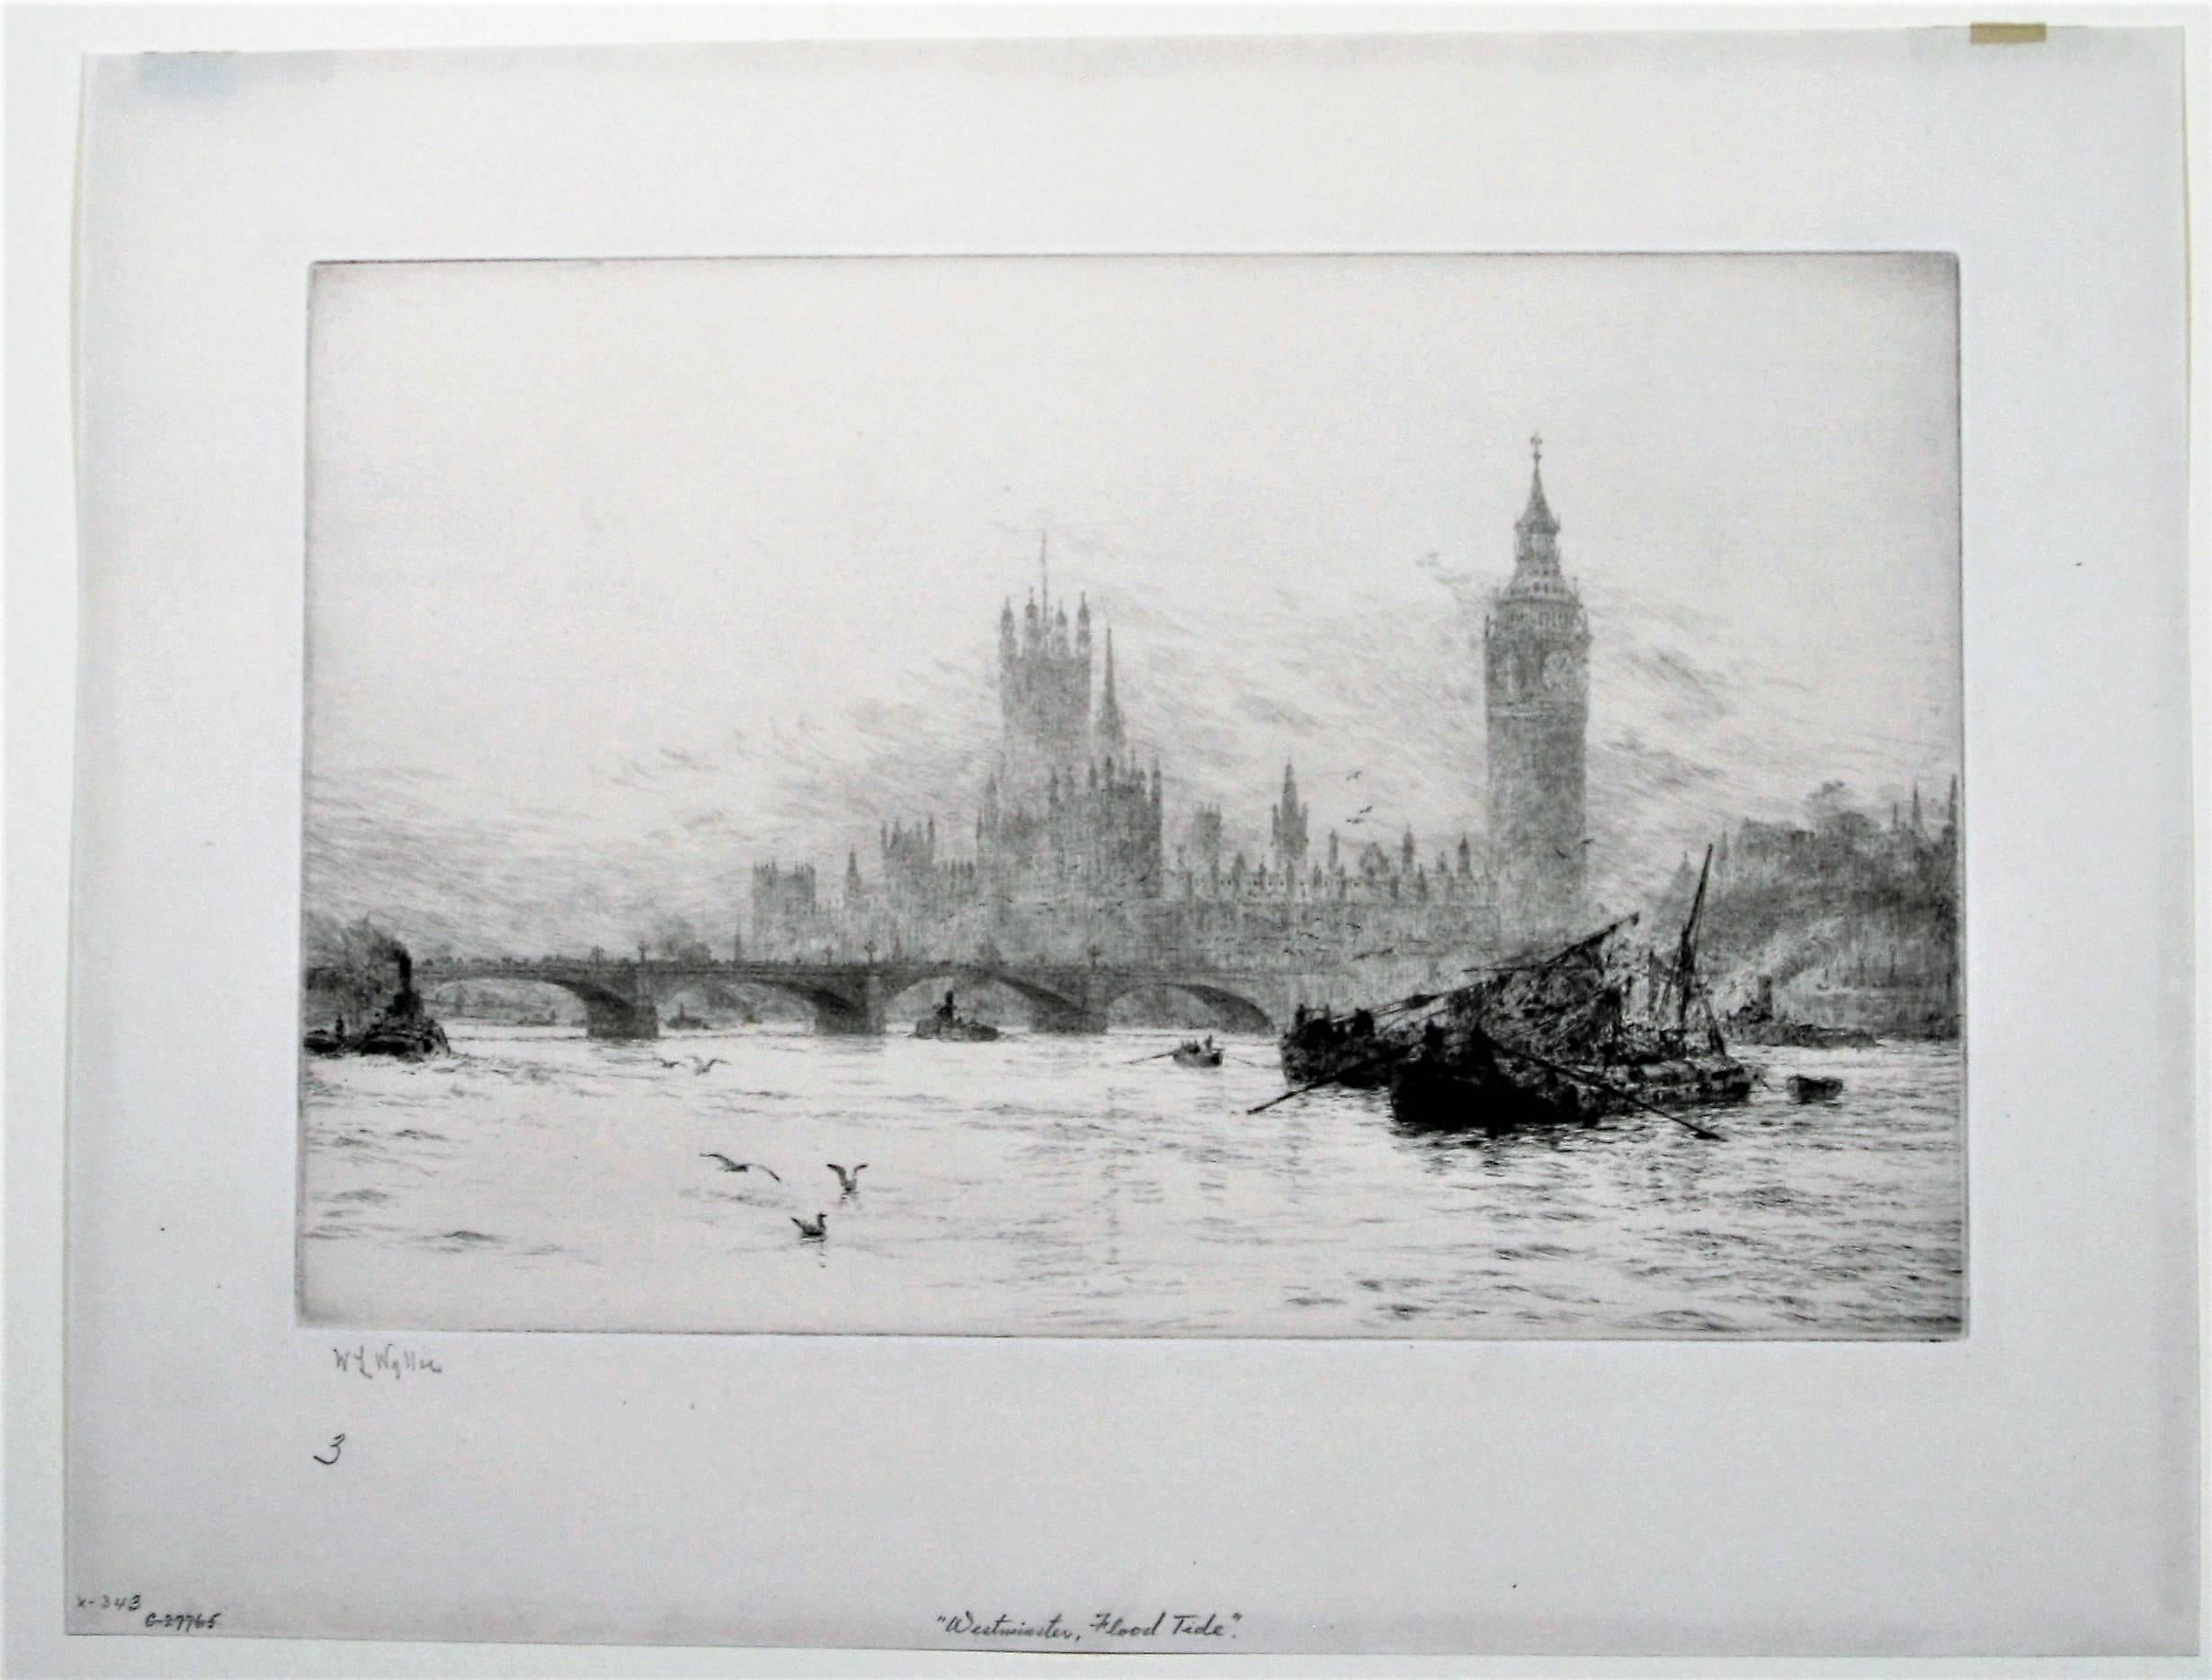 Westminster Flood Tide - Print by William Lionel Wyllie, R.A., R.I., R.E.